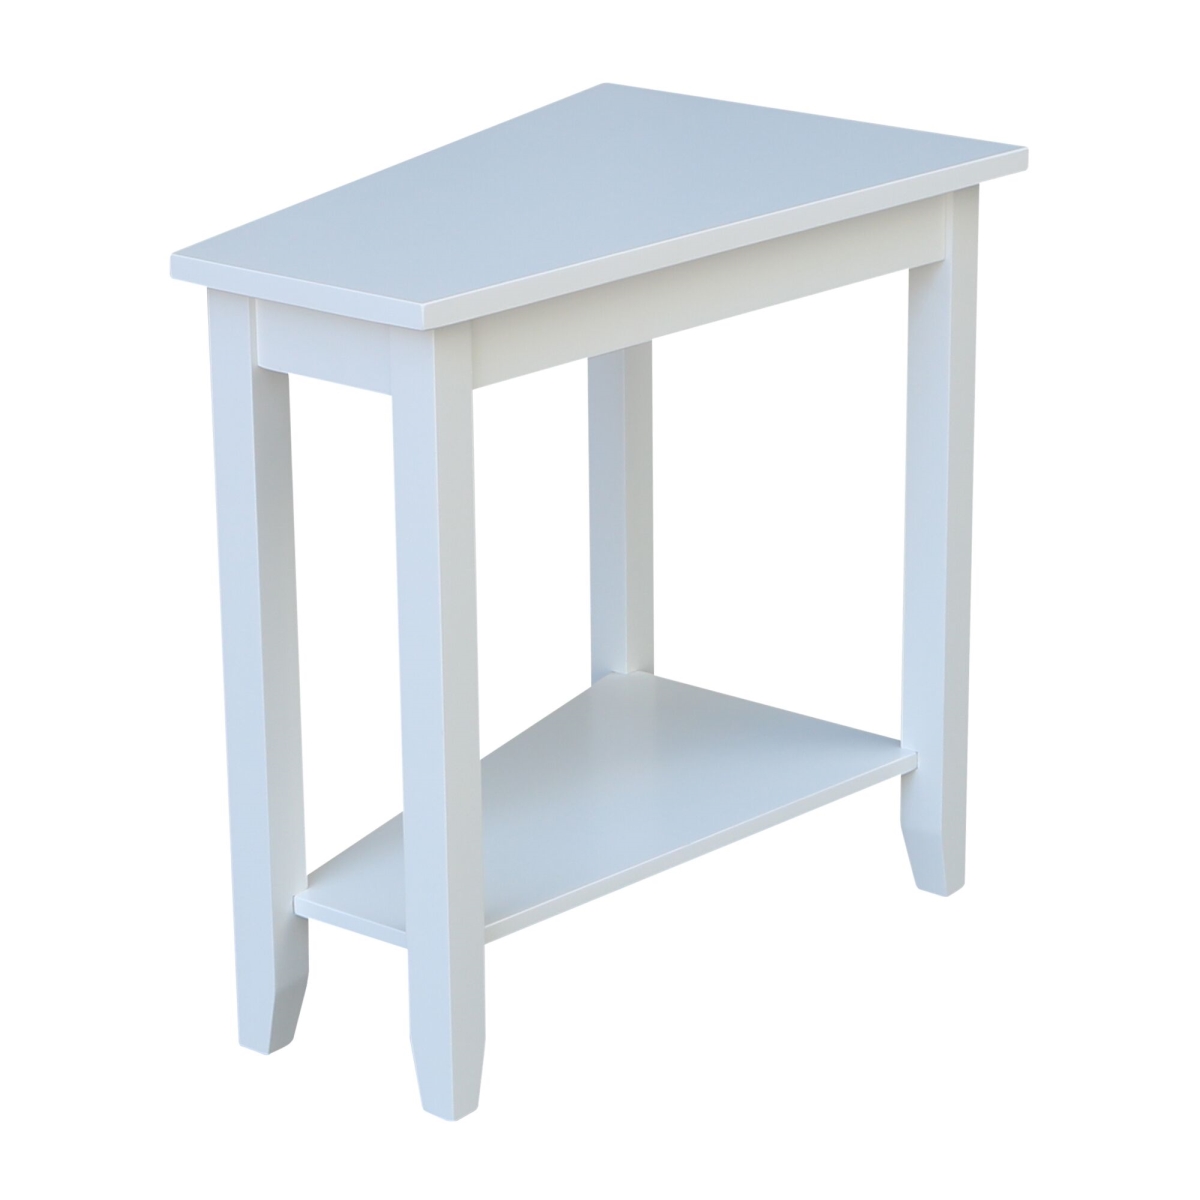 Ot08-45 Keystone Accent Table, White